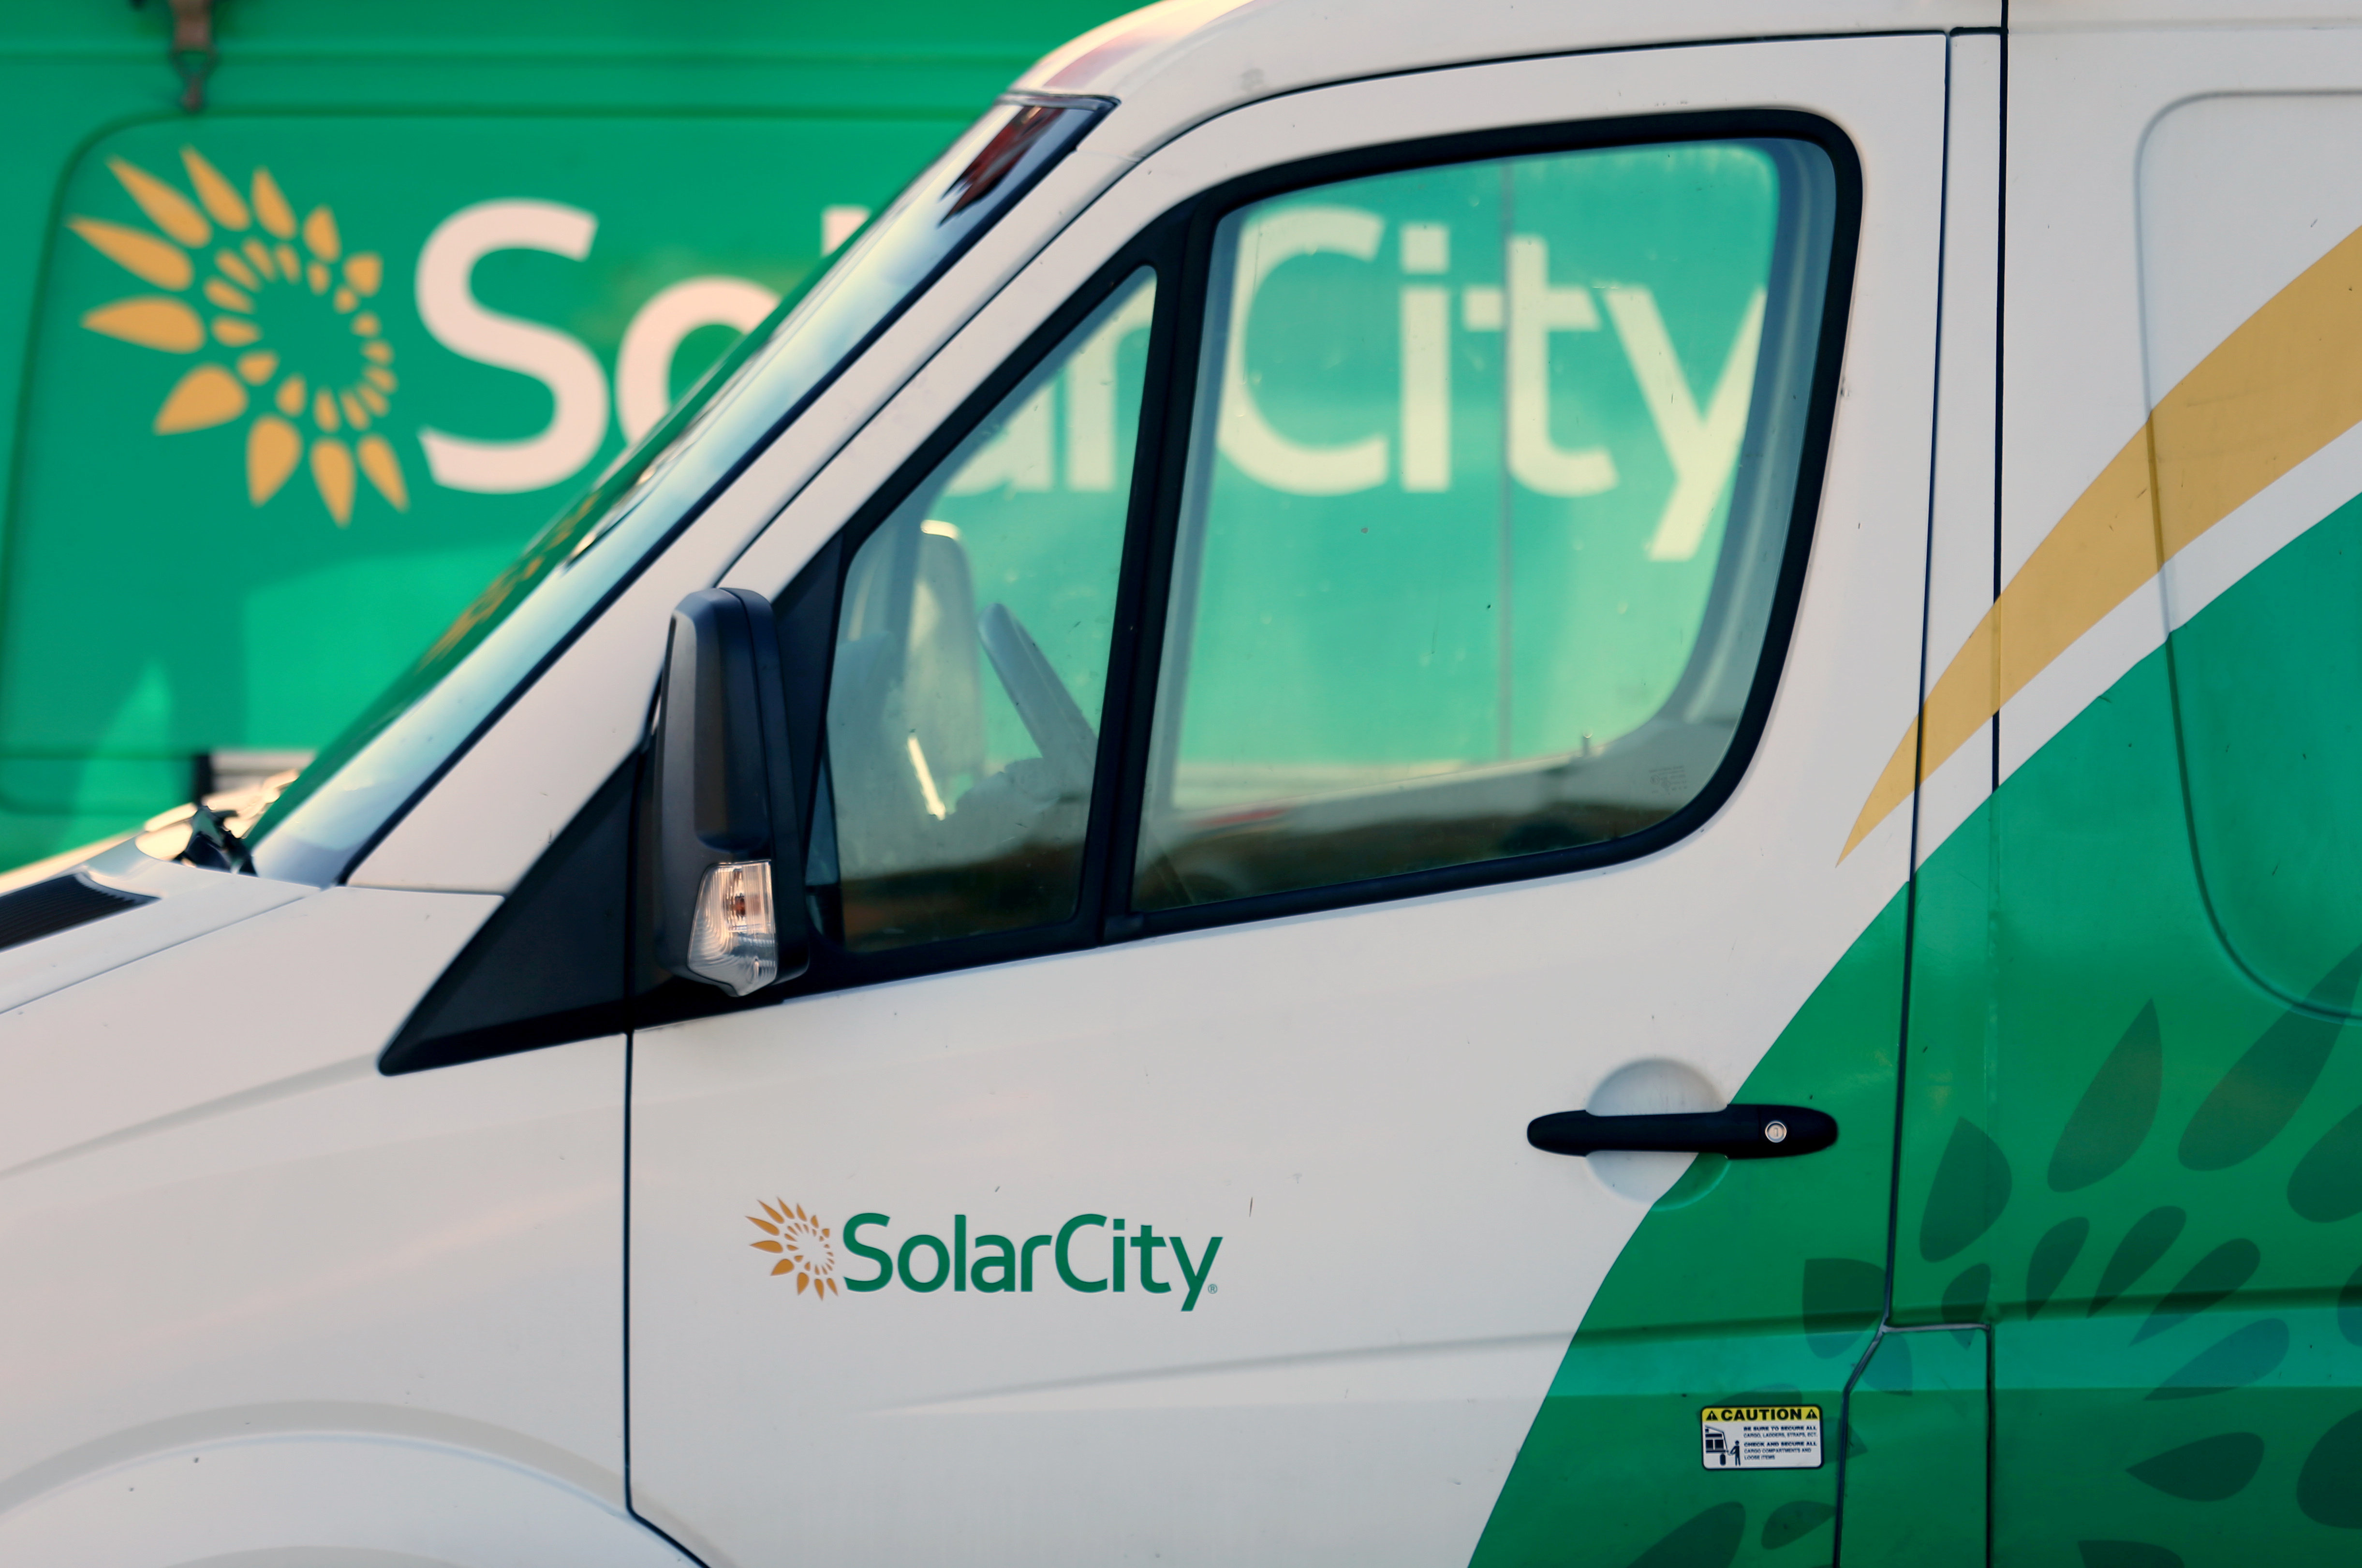 SolarCity trucks are shown in San Diego, California